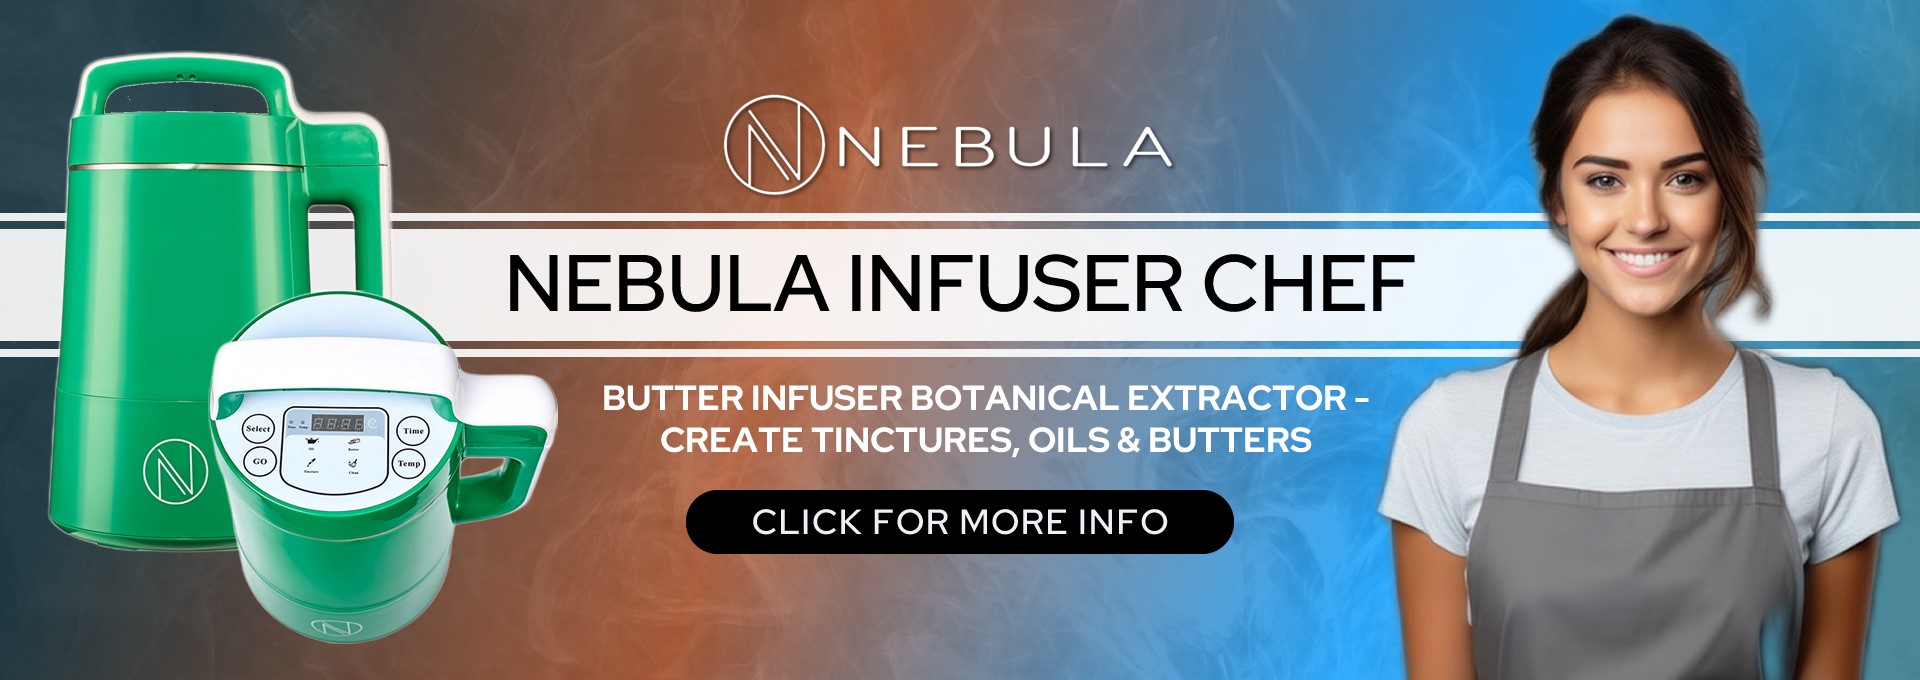 Nebula infuser chef herb